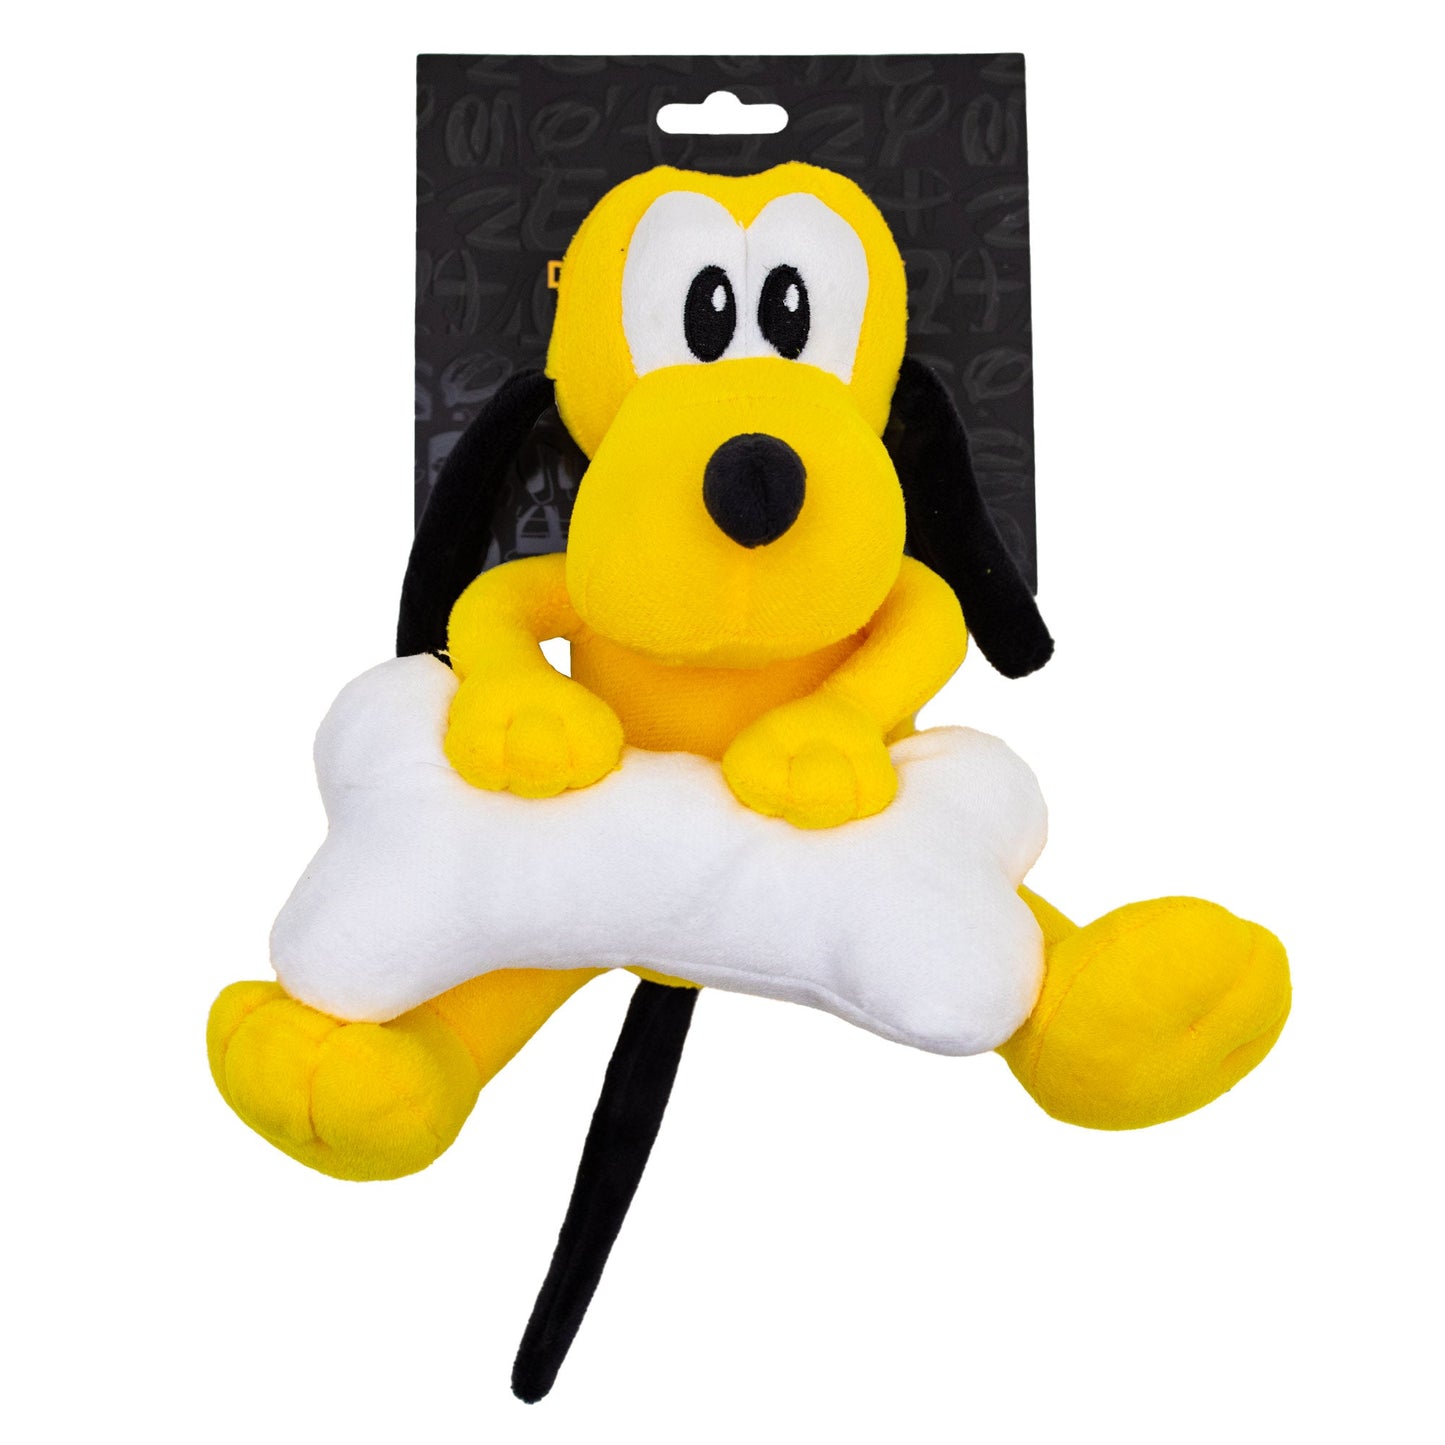 Dog Toy Squeaker Plush - Disney Pluto with Bone Sitting Pose